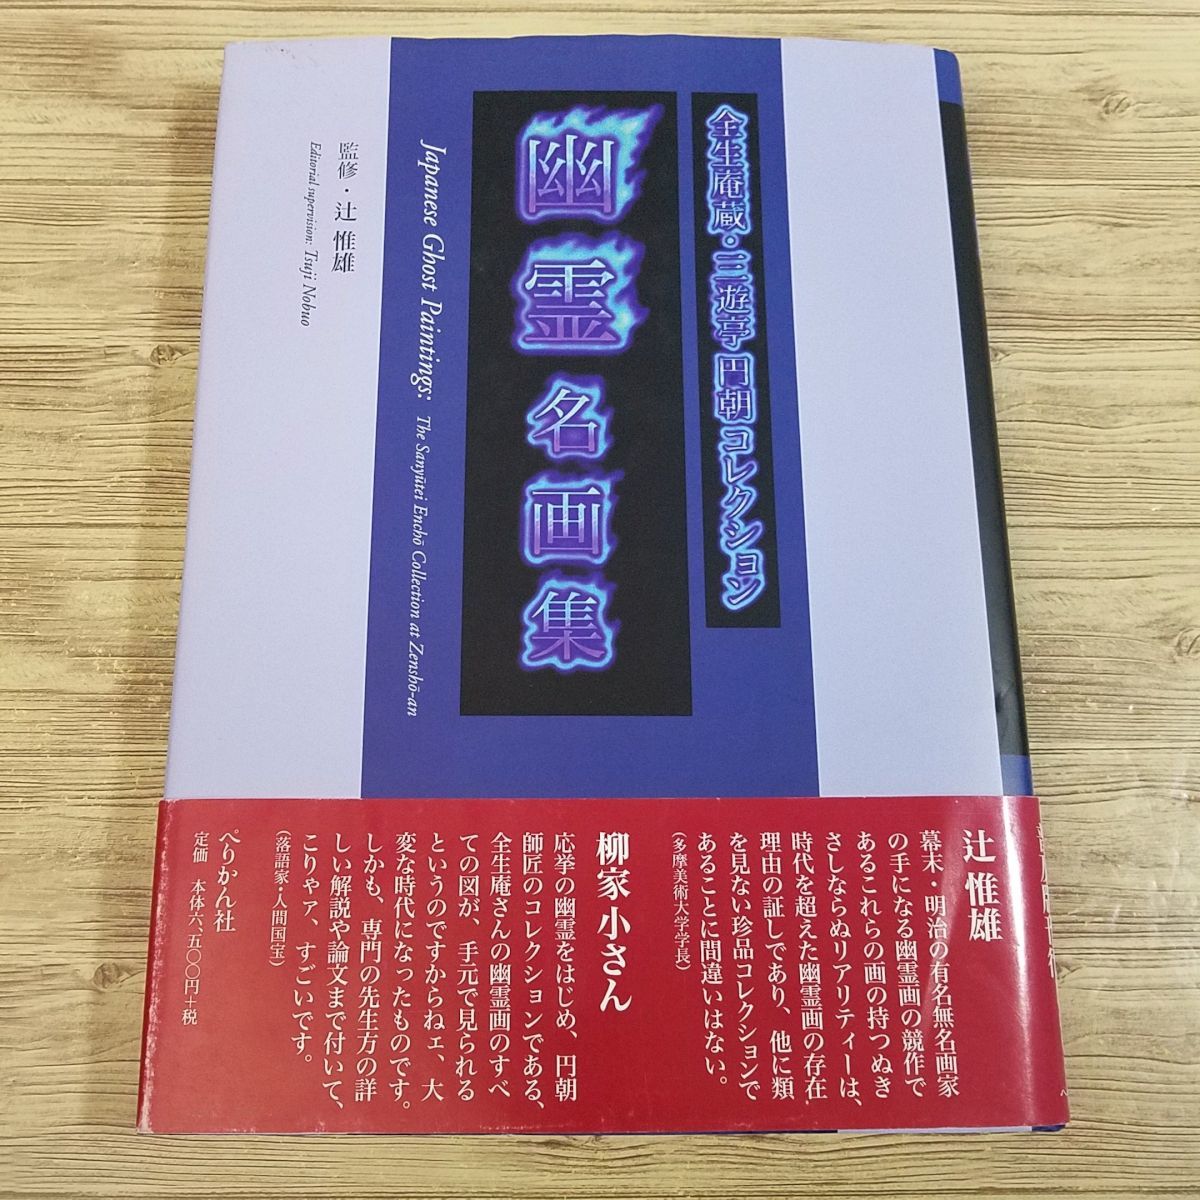 कला पुस्तक [भूत कृति संग्रह (लोकप्रिय संस्करण) ज़ेनसी एंज़ो/संयुतेई एनचो संग्रह] भूत पेंटिंग योकाई पेंटिंग मारुयामा ओकीयो, चित्रकारी, कला पुस्तक, कार्यों का संग्रह, कला पुस्तक